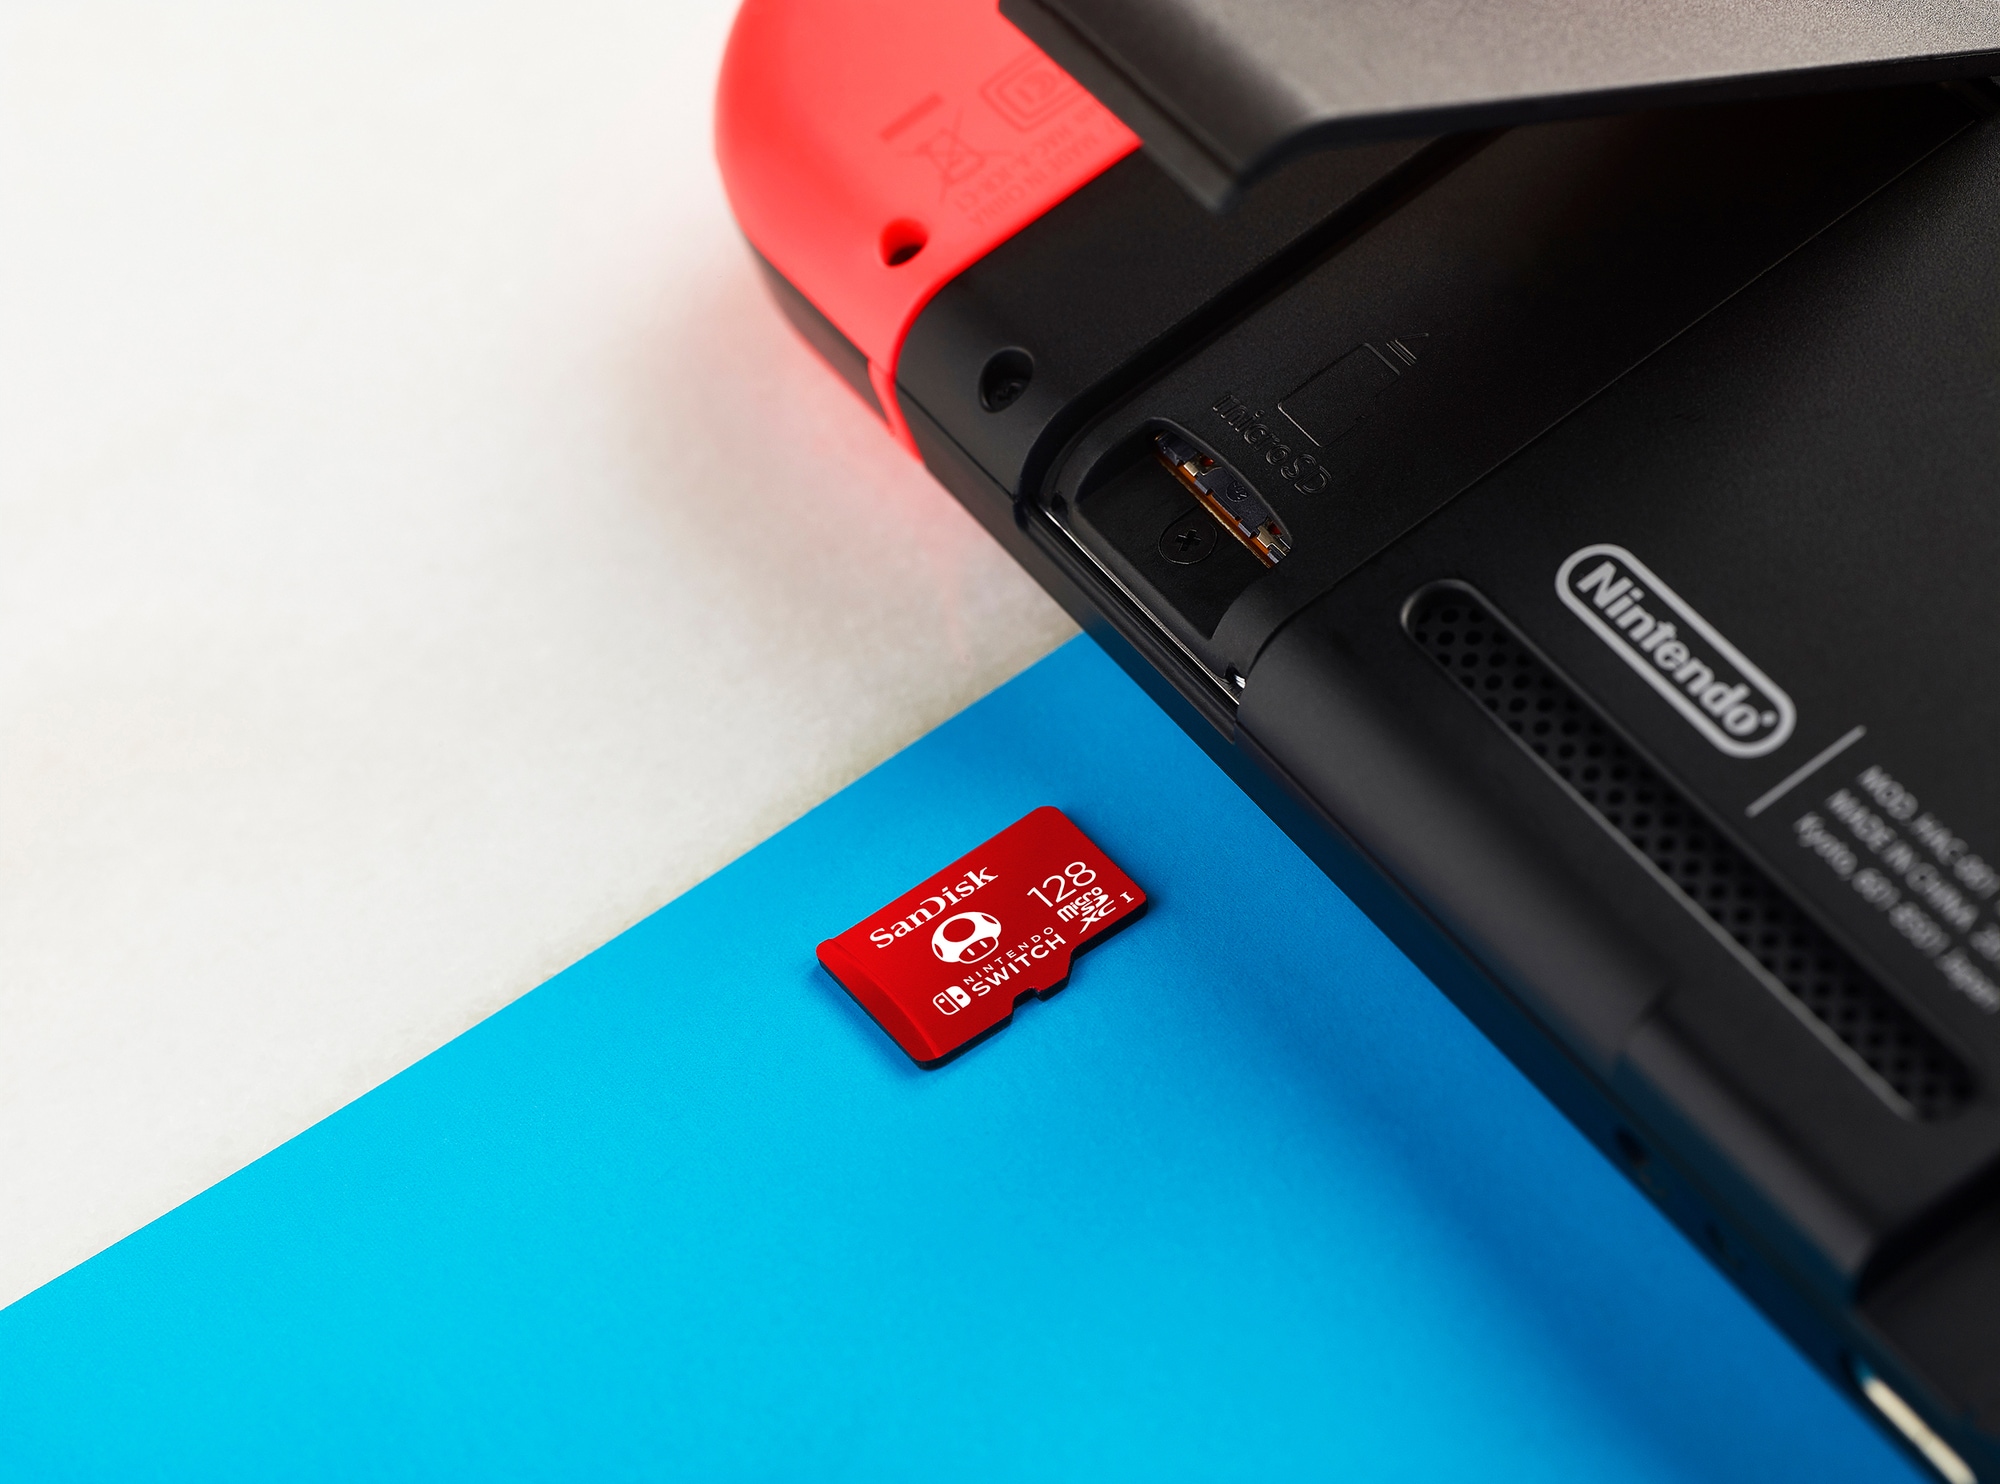 SanDisk MicroSDXC minnekort til Nintendo Switch 128 GB - Minnekort til  mobil og GPS - Elkjøp